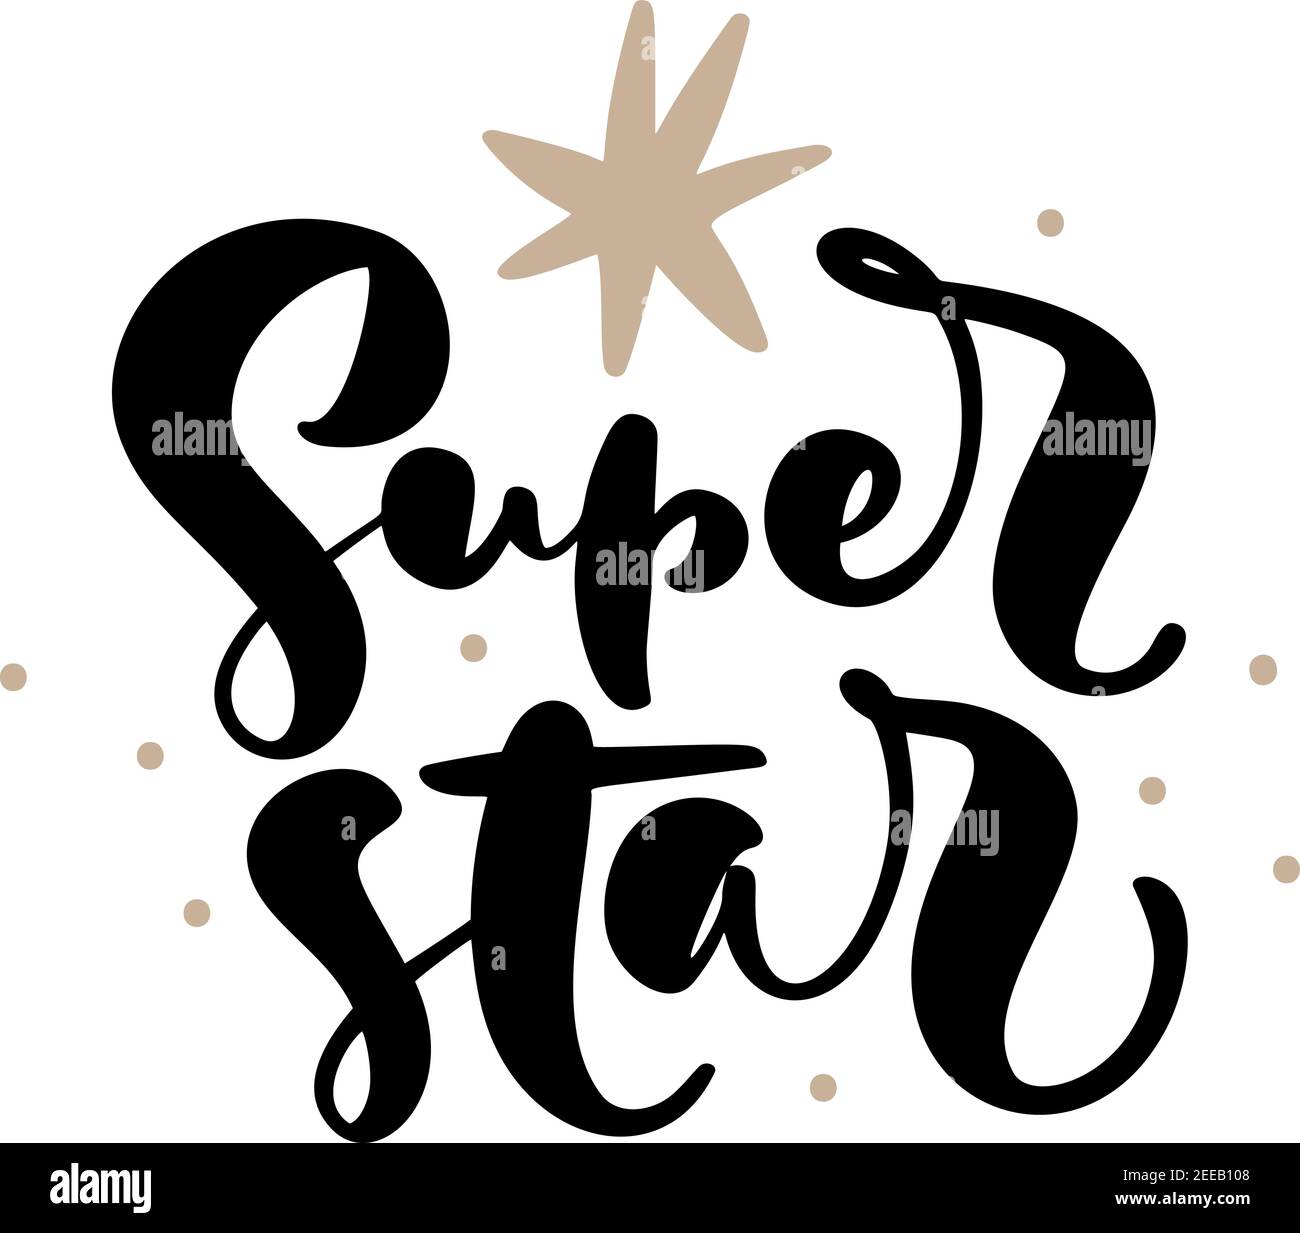 Super Star Vector Typography For Print Design Stock Illustration - Download  Image Now - Fame, Logo, Star Shape - iStock